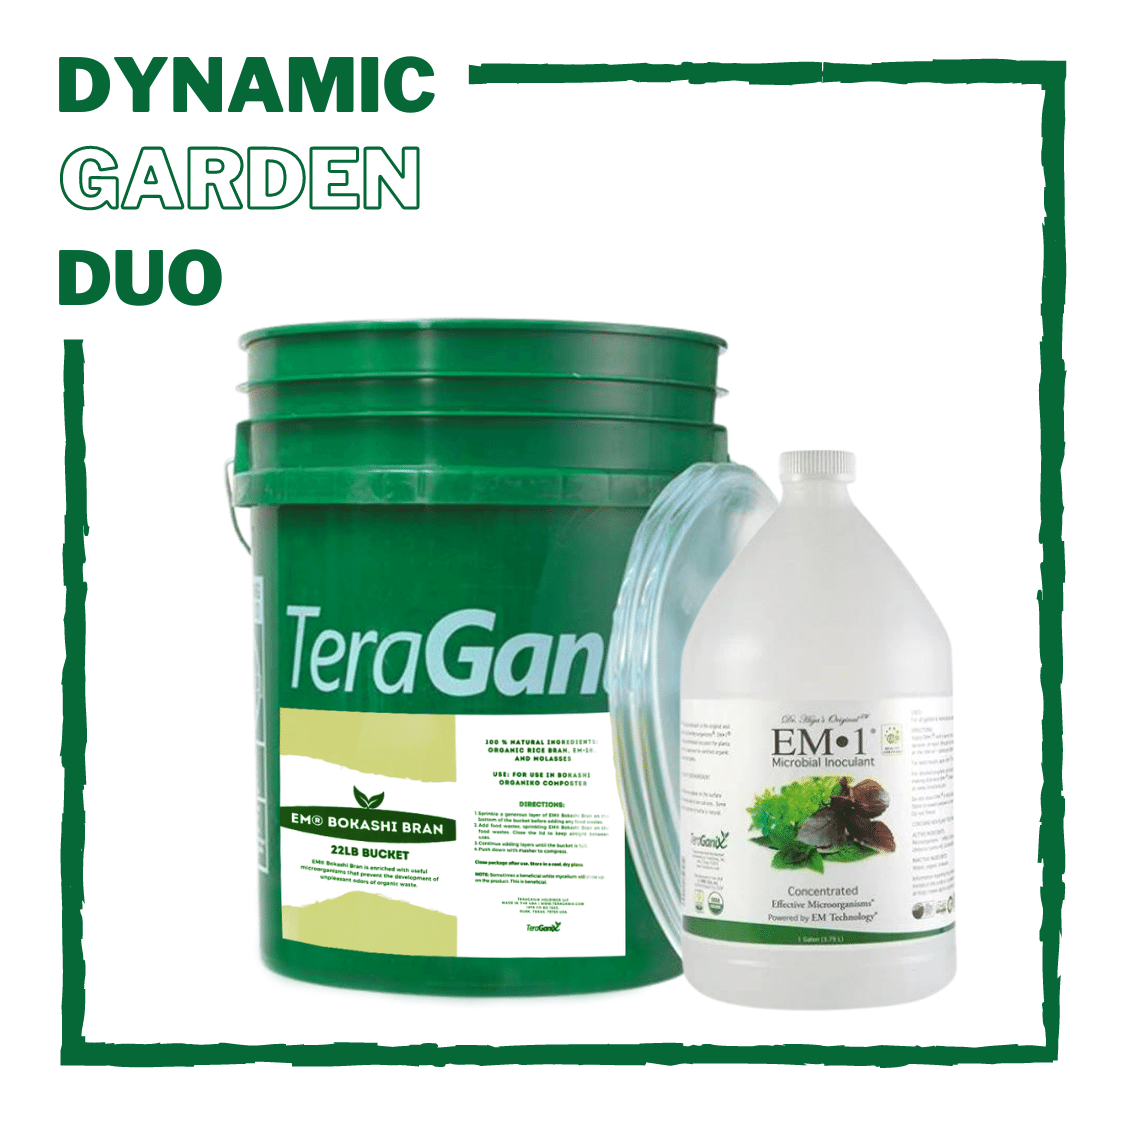 TeraGanix Gardening 1 Gallon Bottle EM-1® + 22 lb Bucket EM® Premium Bokashi Dynamic Garden Duo Set